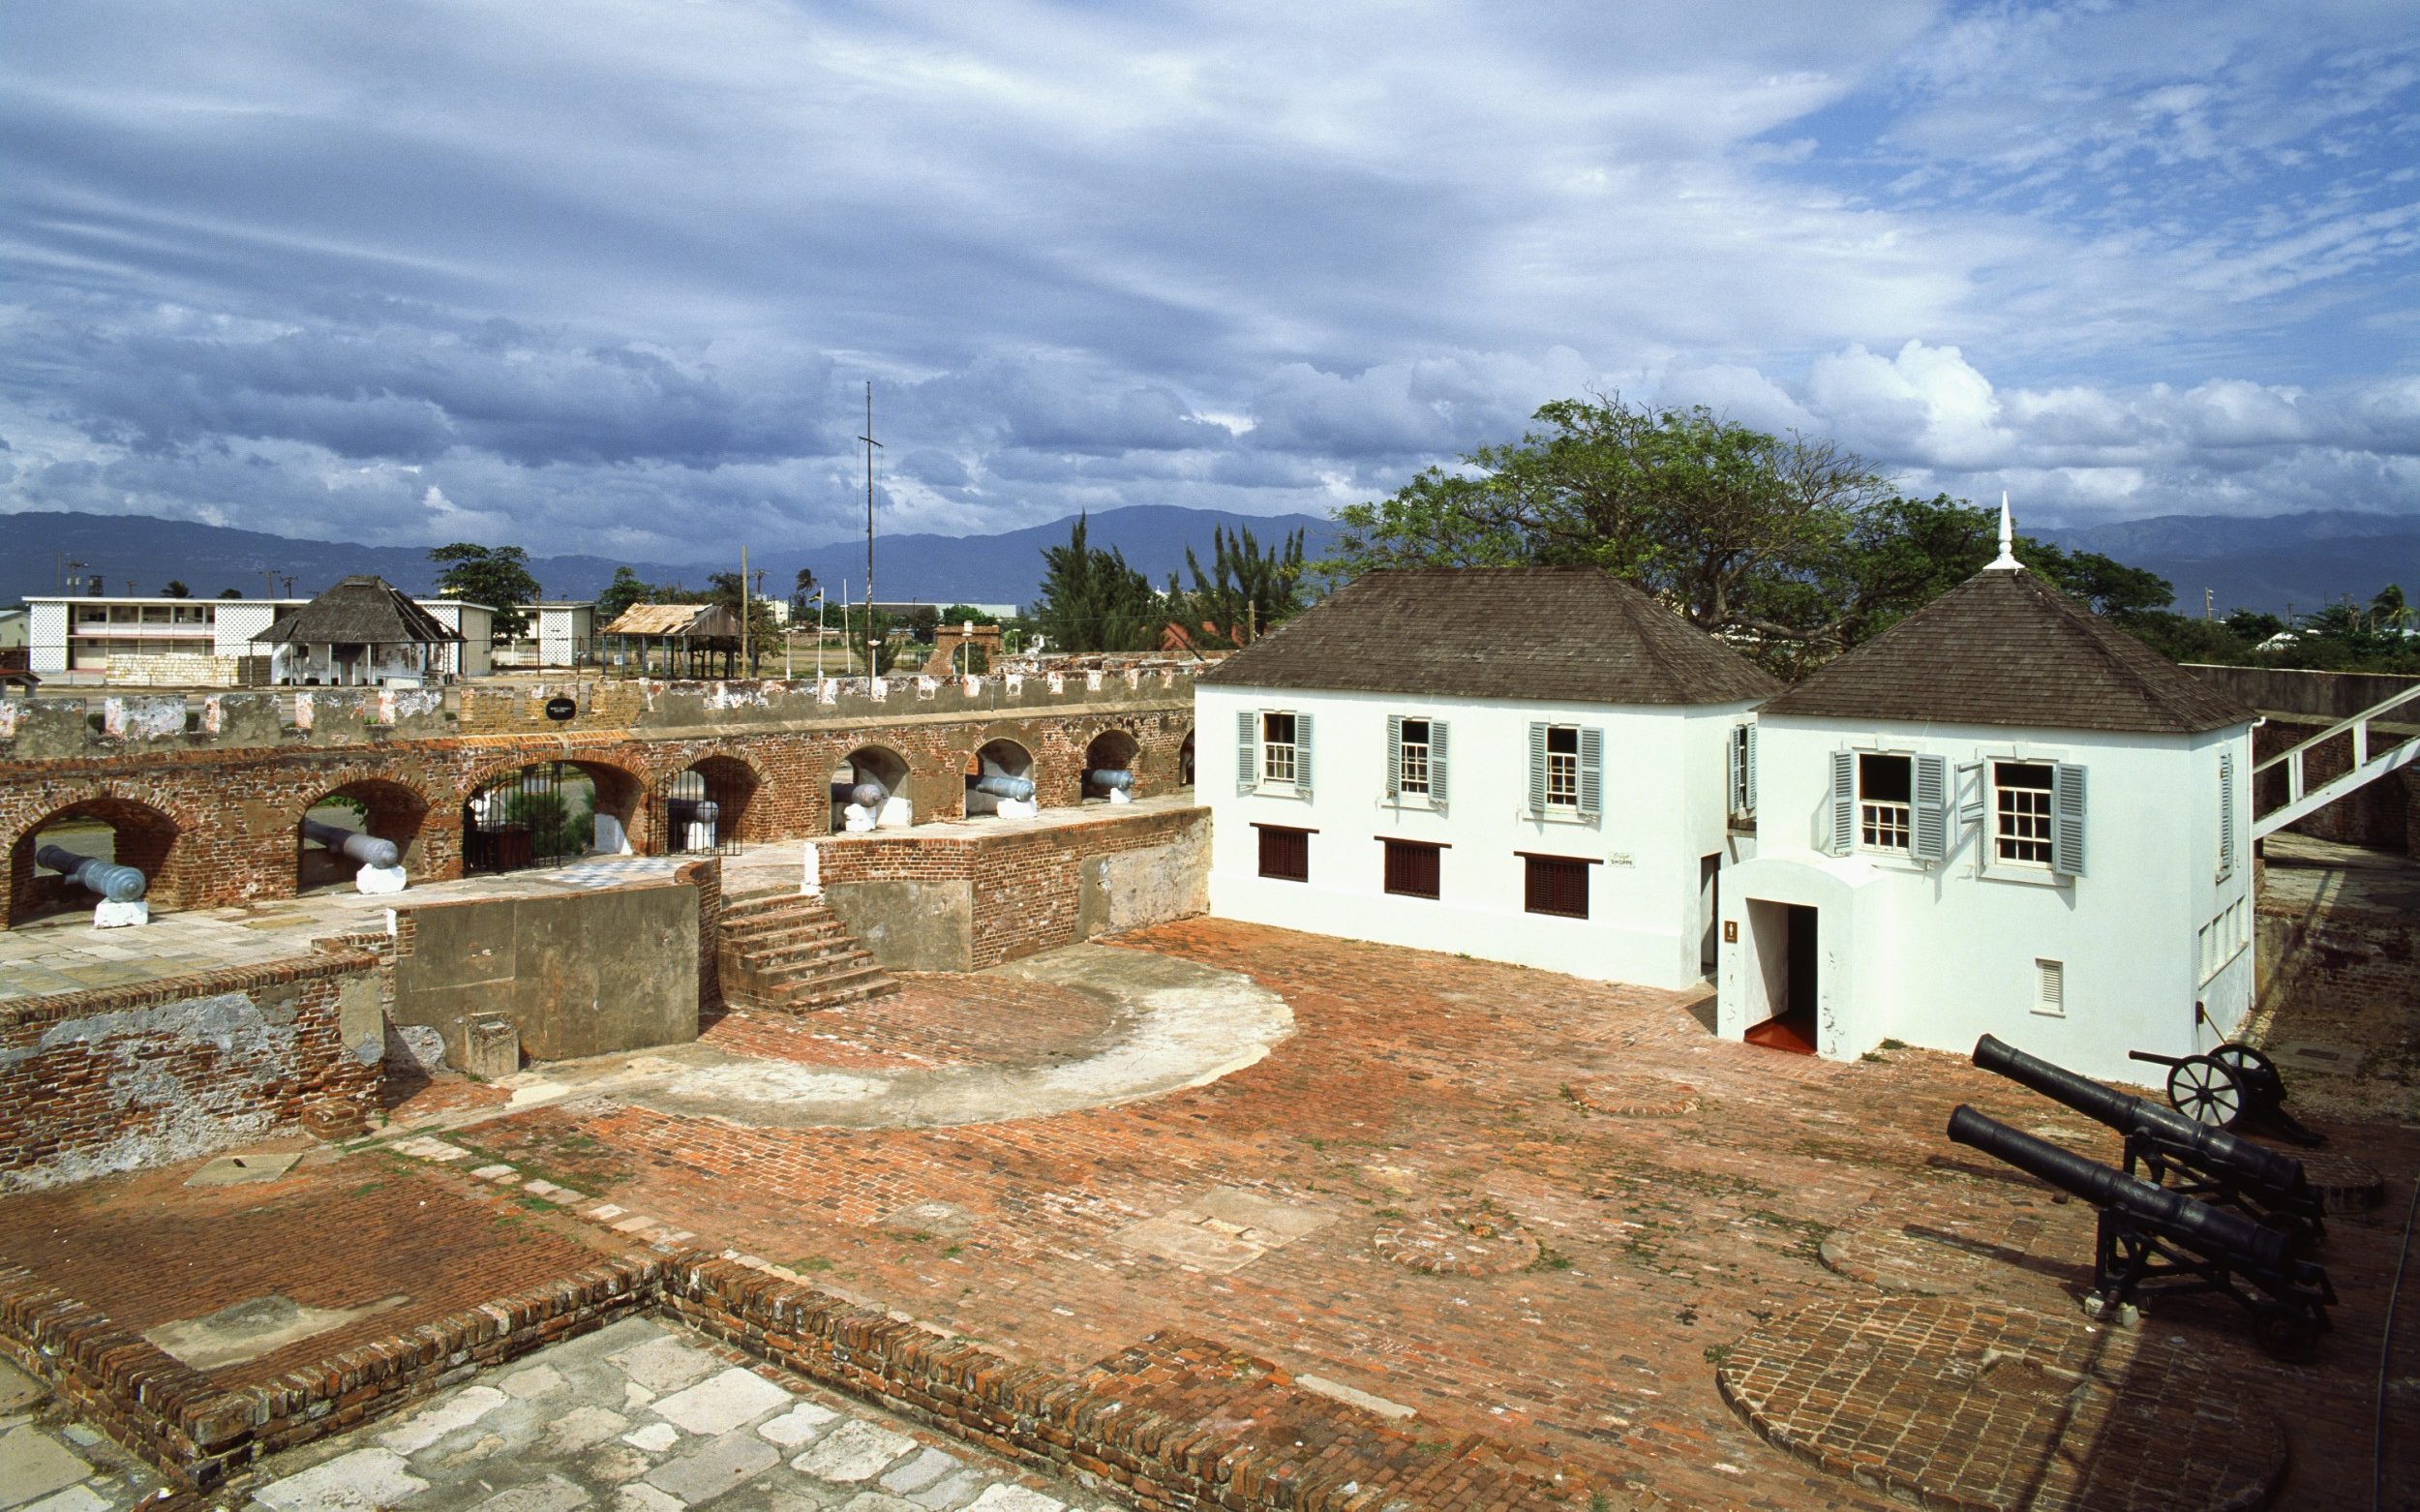 jamaica may seek reparations from britain to fund heritage ‘dark tourism’